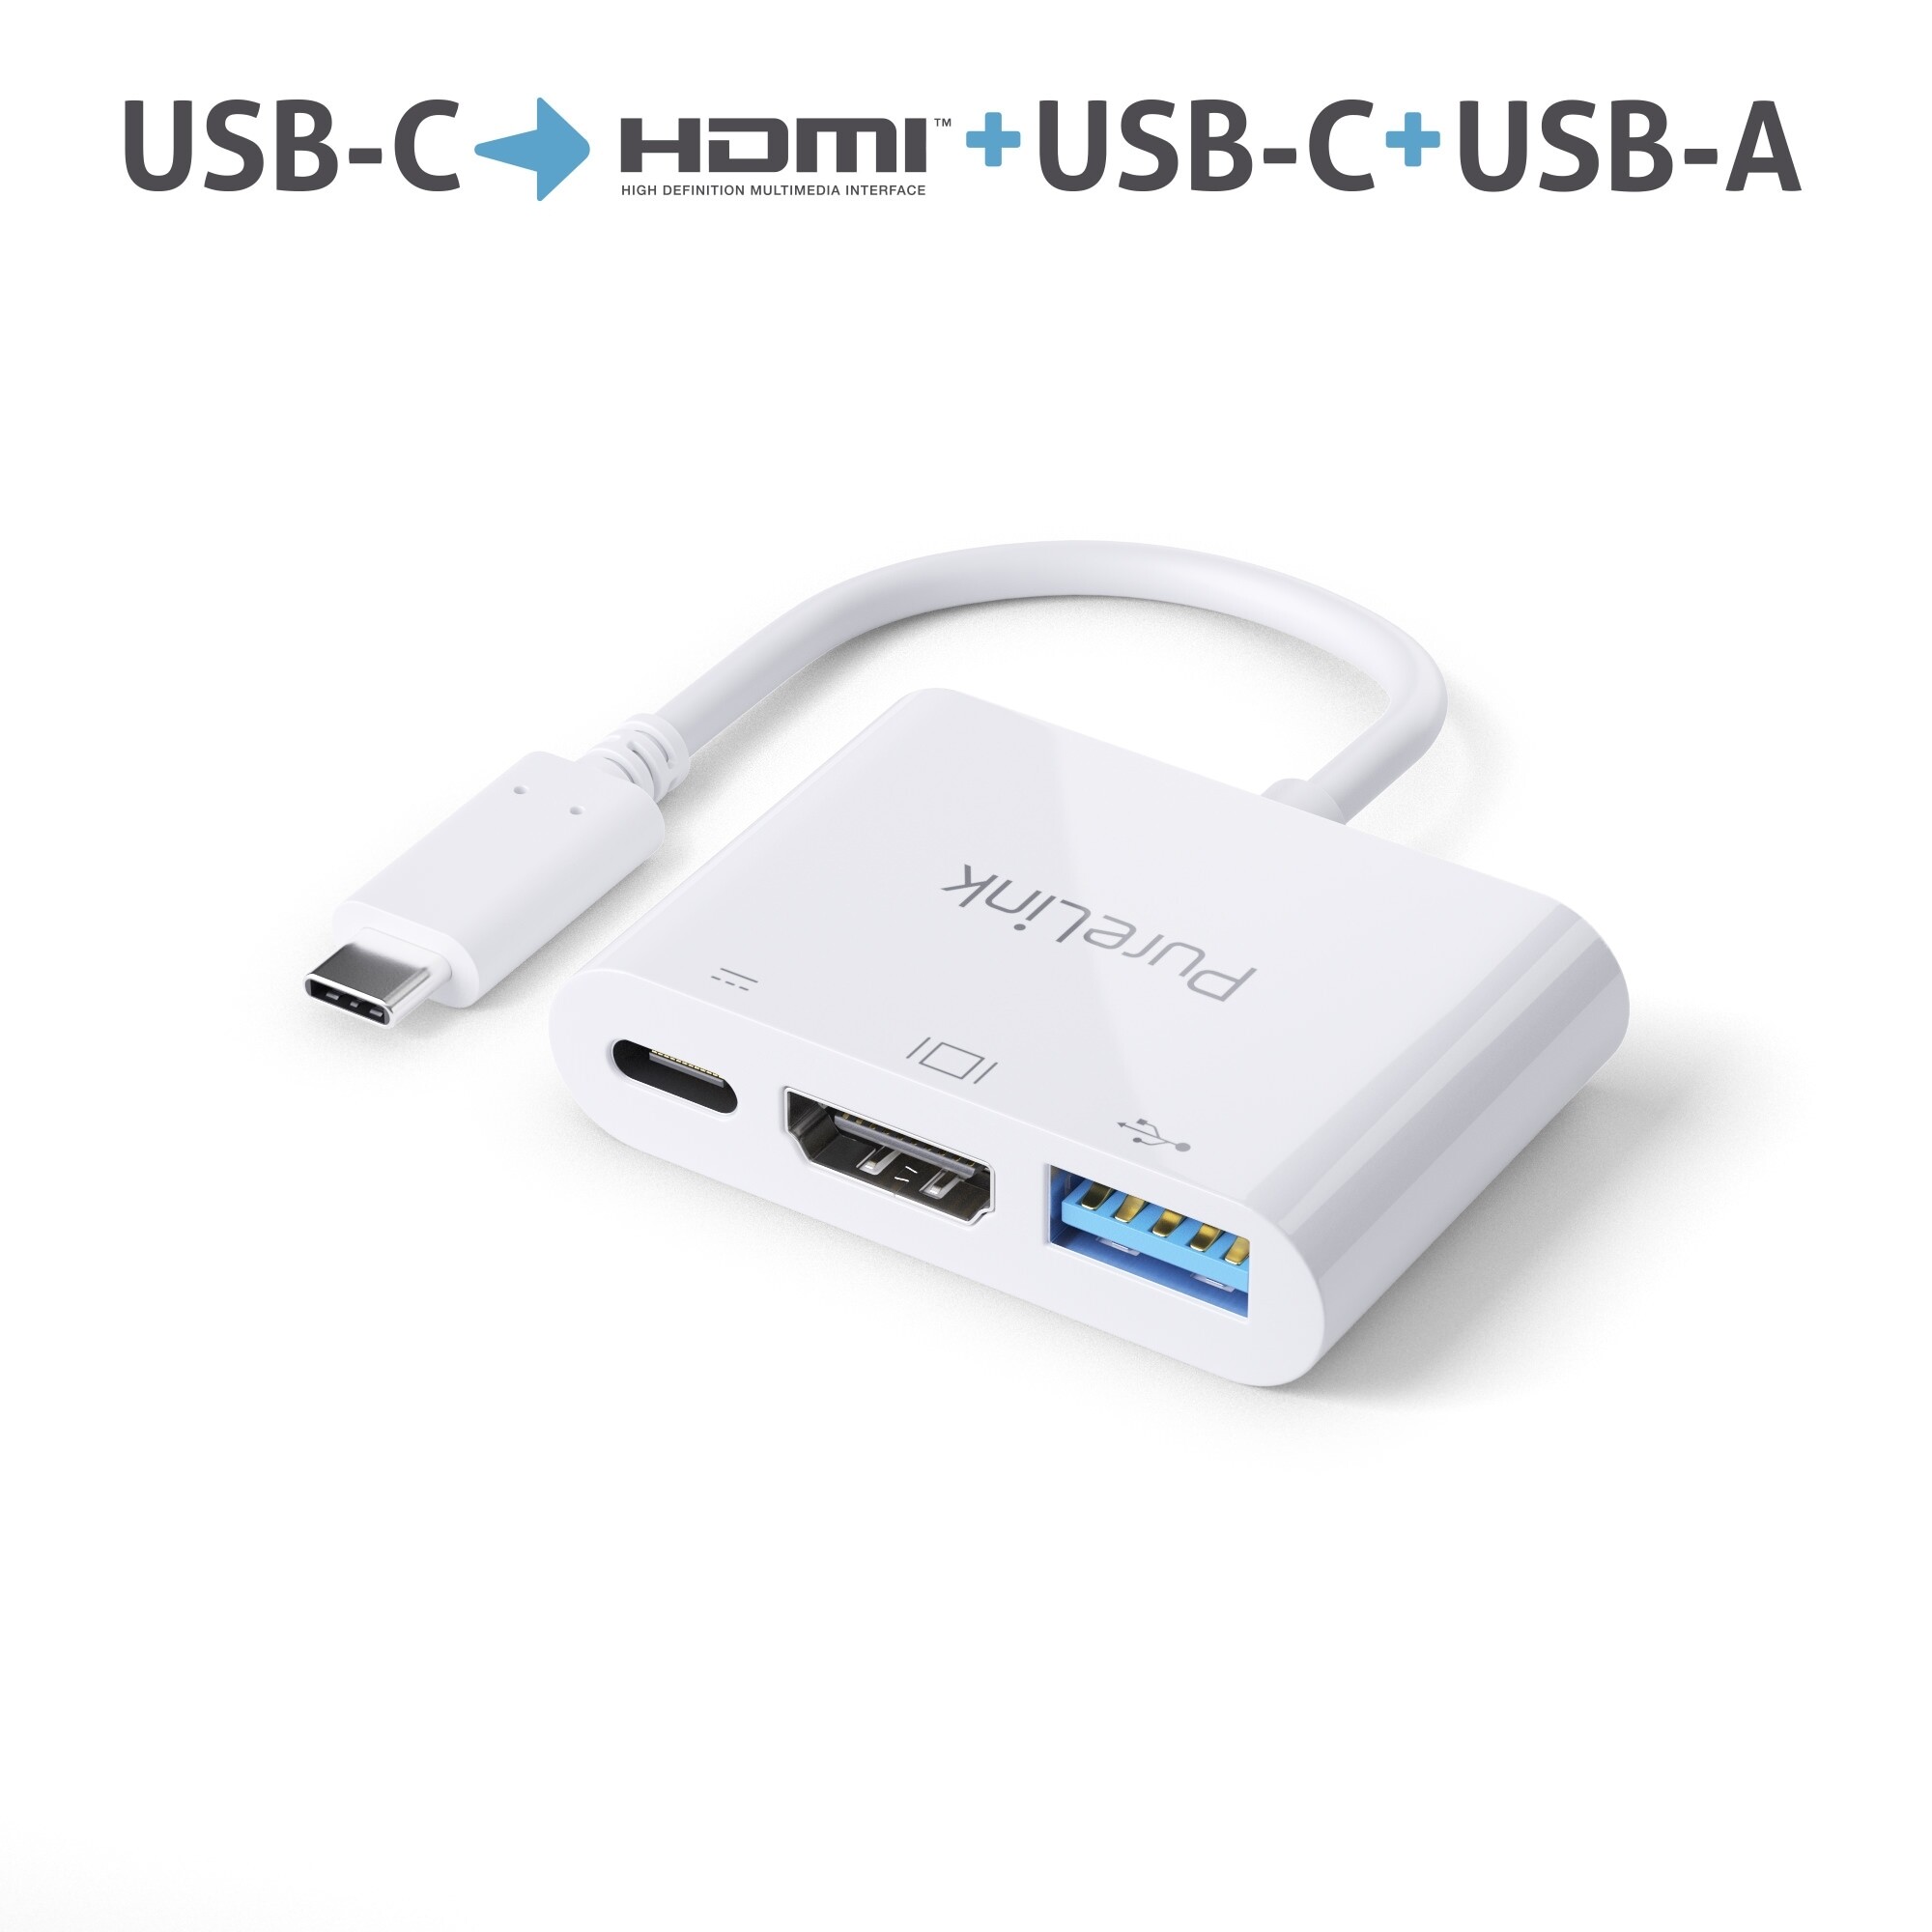 Purelink-IS270-USB-C-auf-HDMI-USB-C-USB-A-Adapter-0-10m-weiss